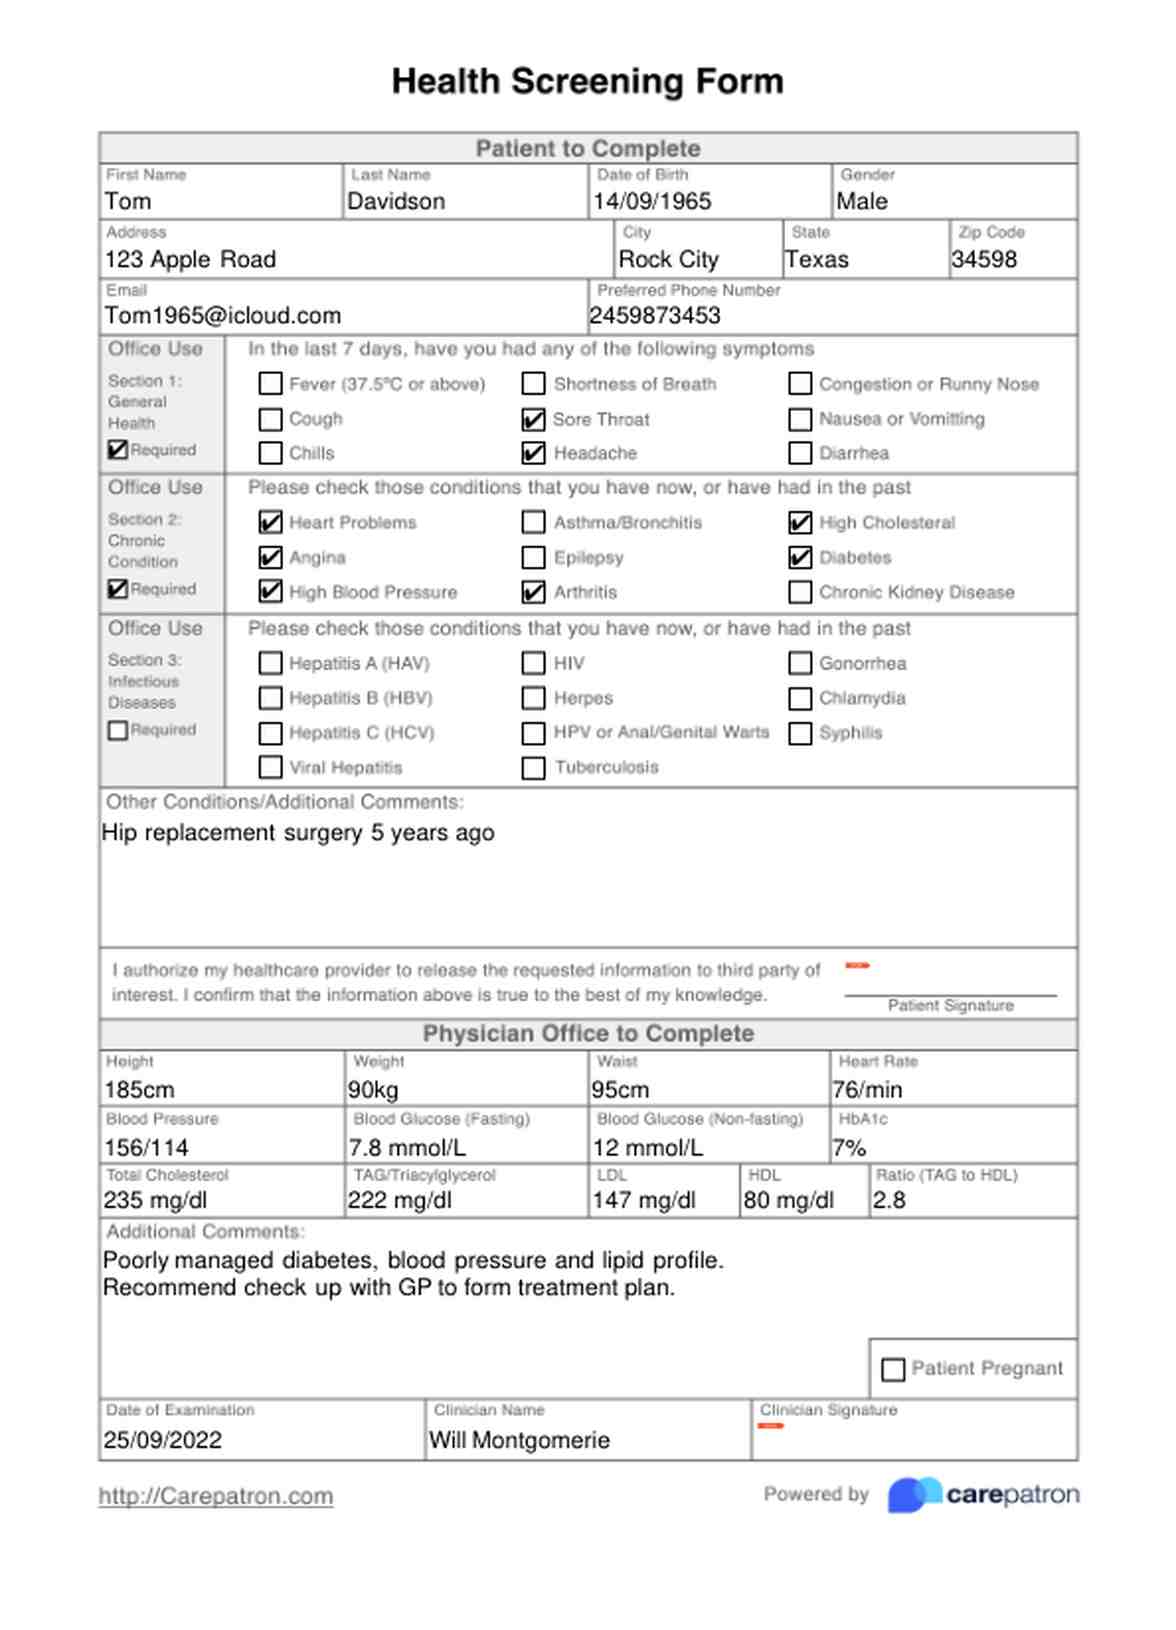 Health Screening Form PDF Example